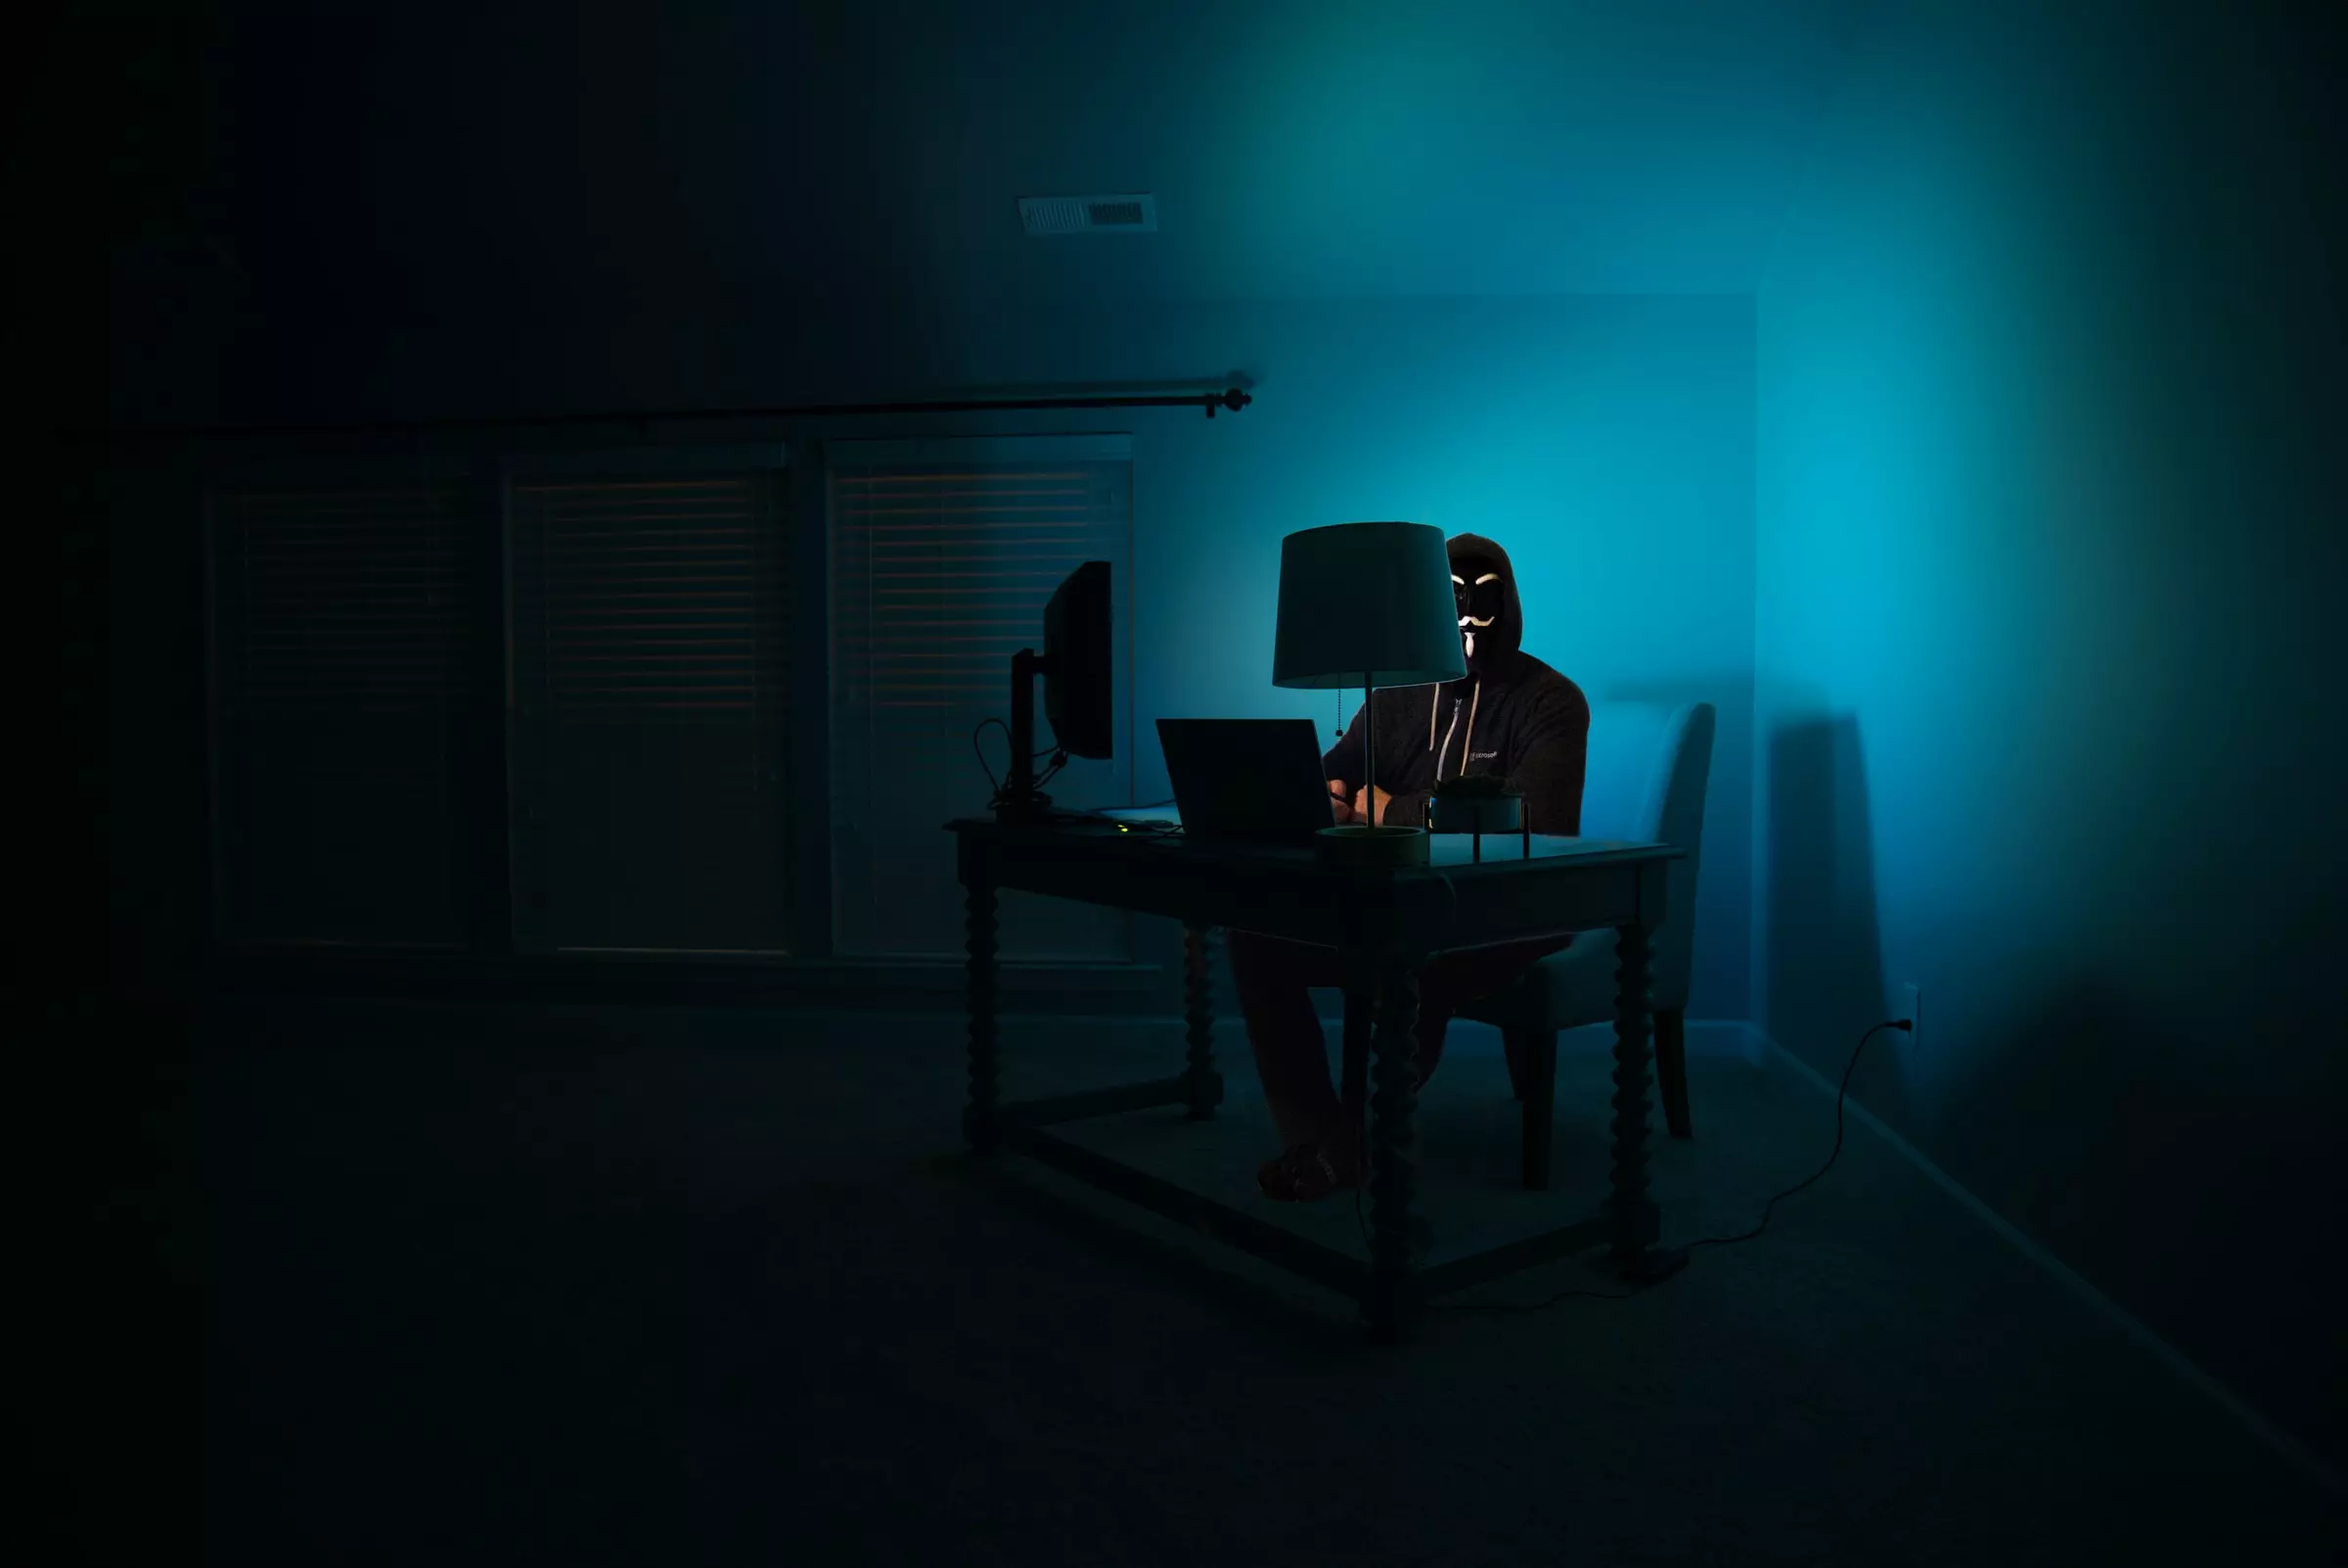 Hacker in dark corner of room with monitor screen lighting his face